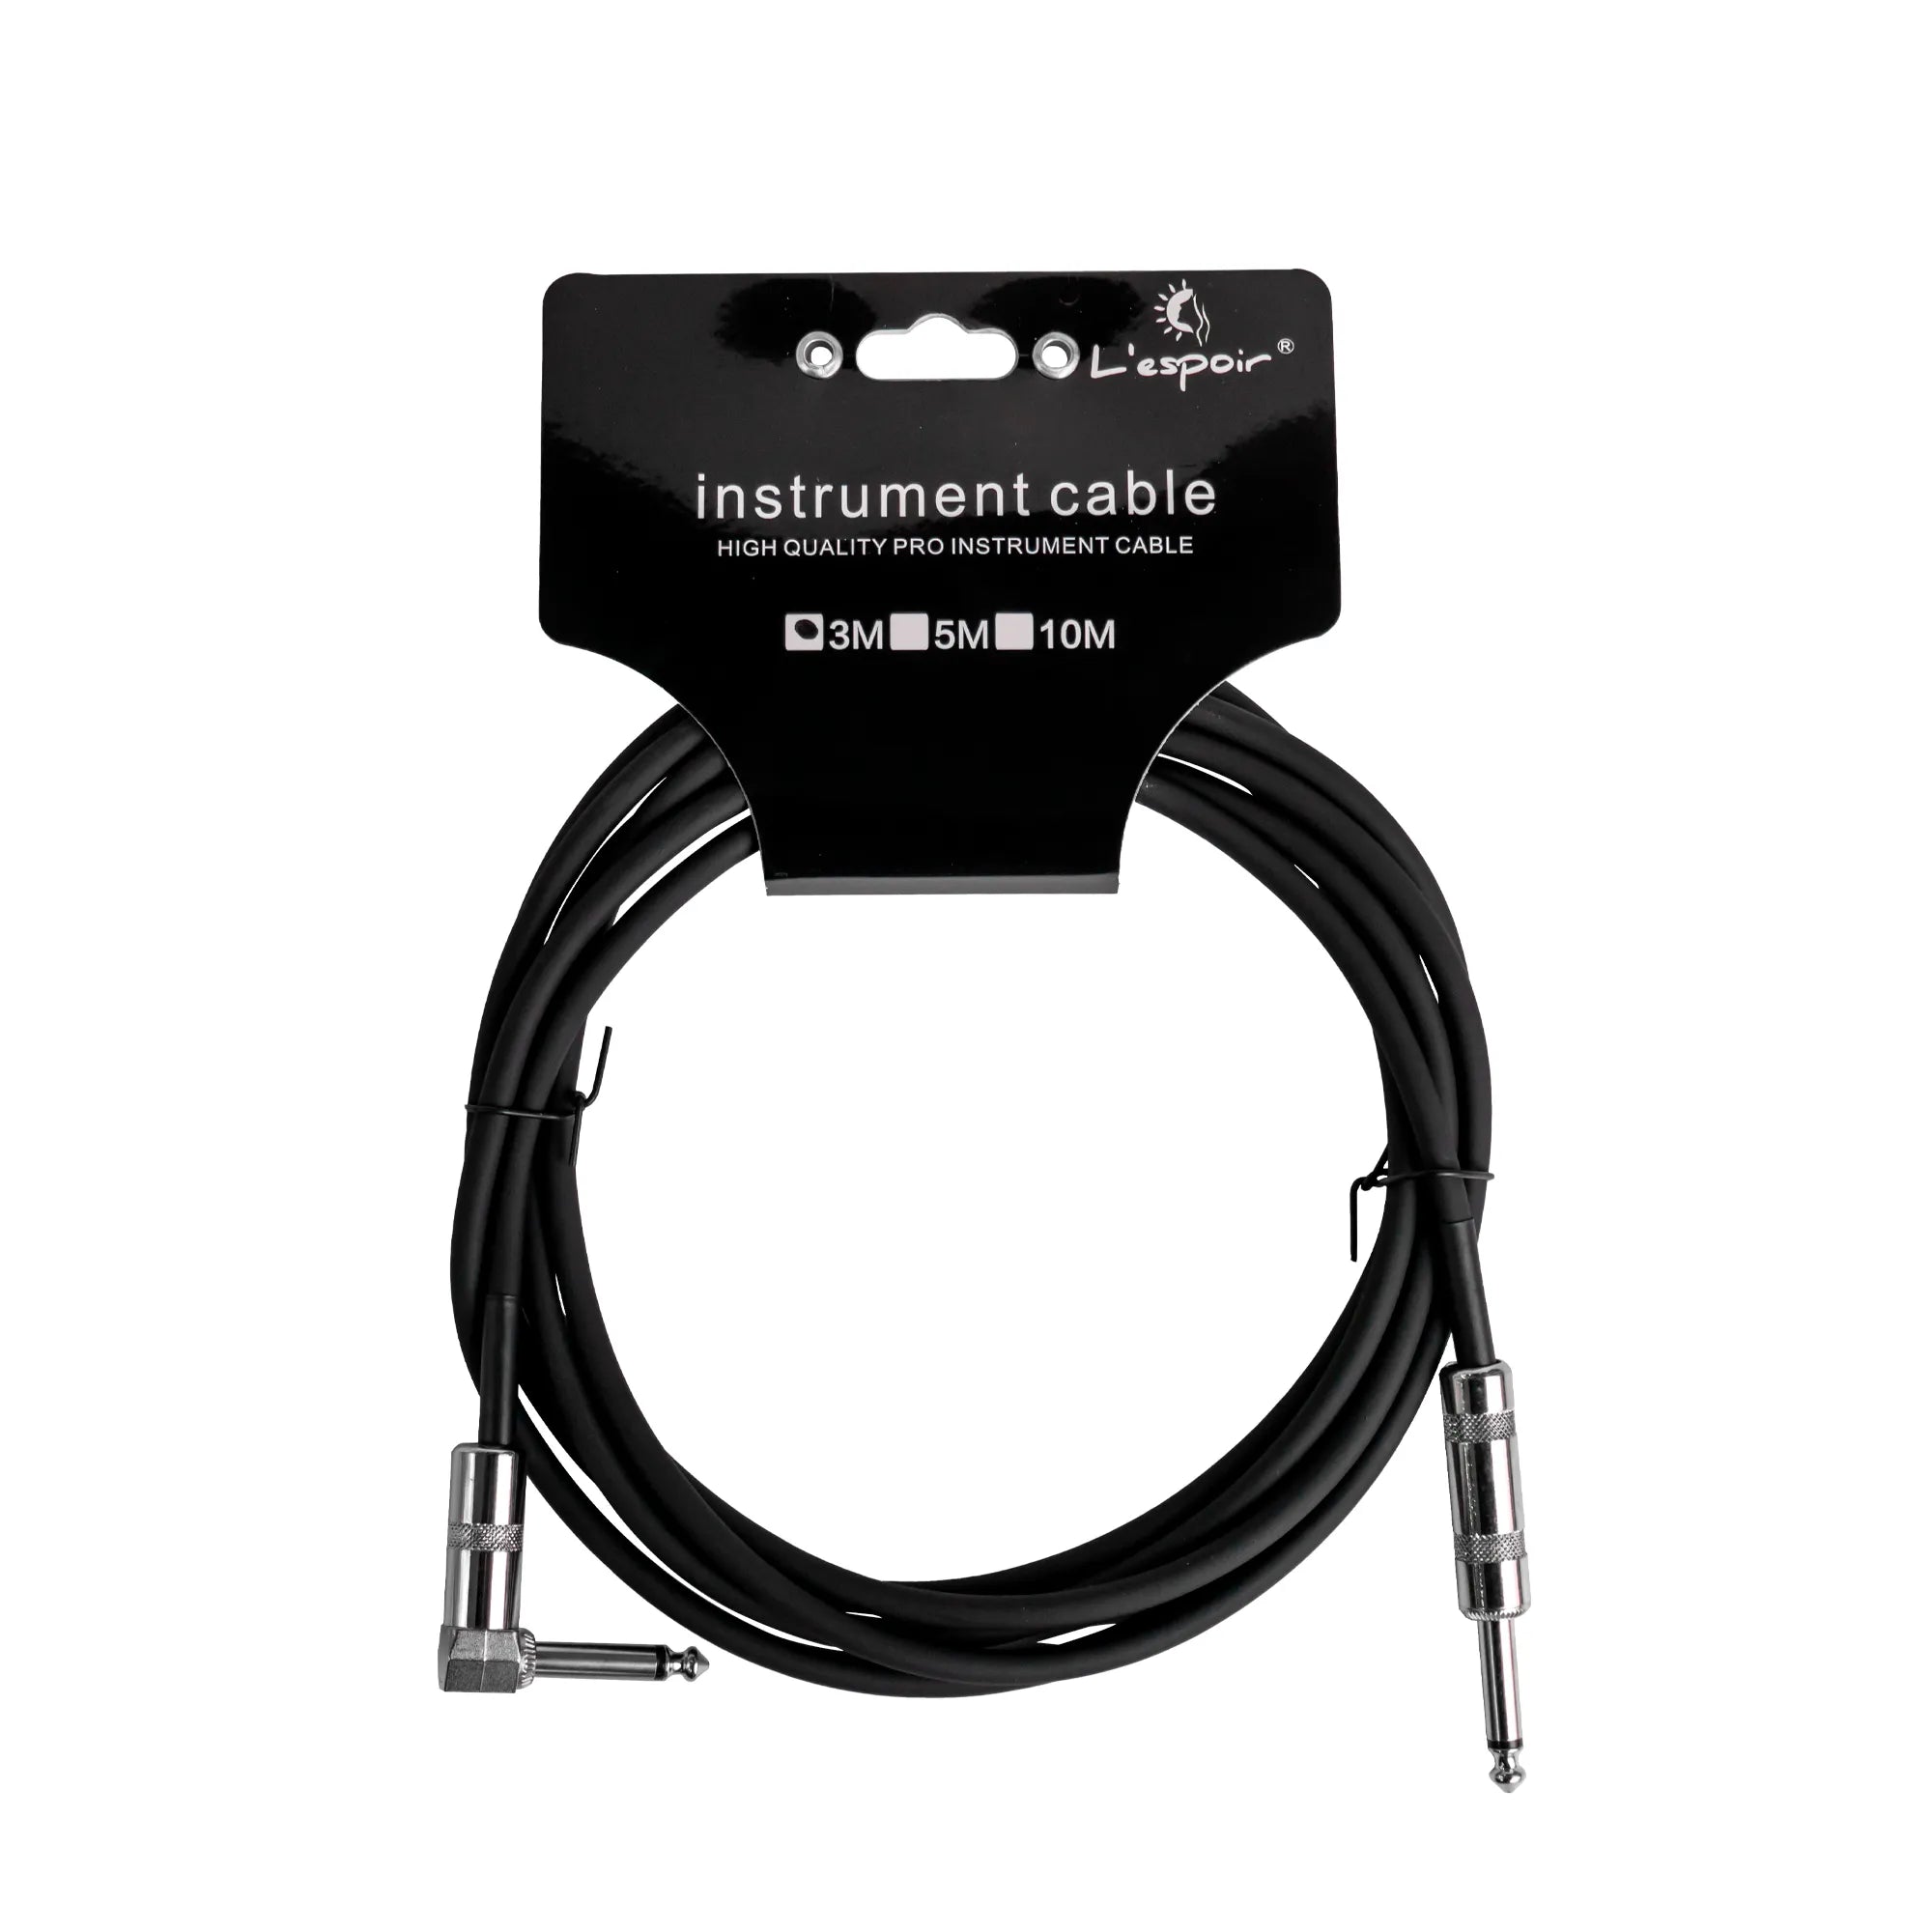 Cable para Instrumento 3mts L'espoir - BC-03